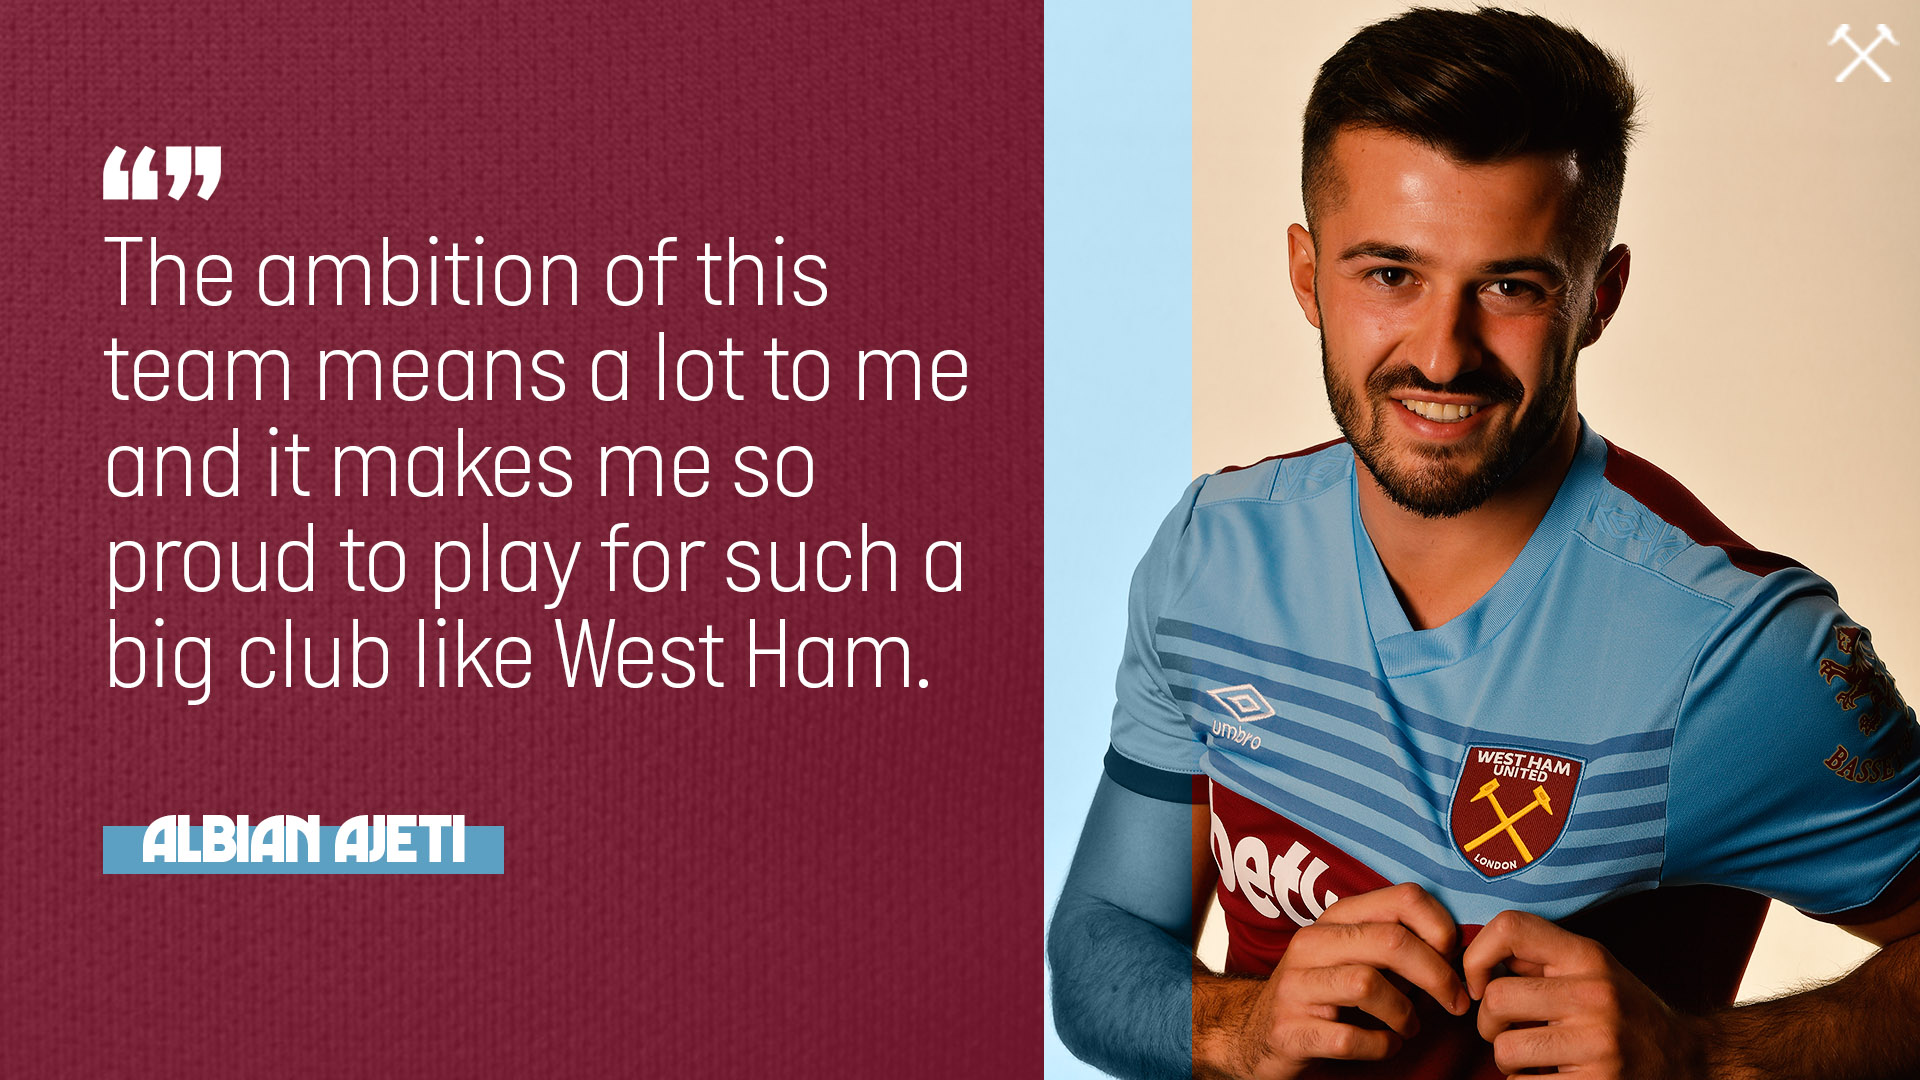 Albian Ajeti signs for West Ham United